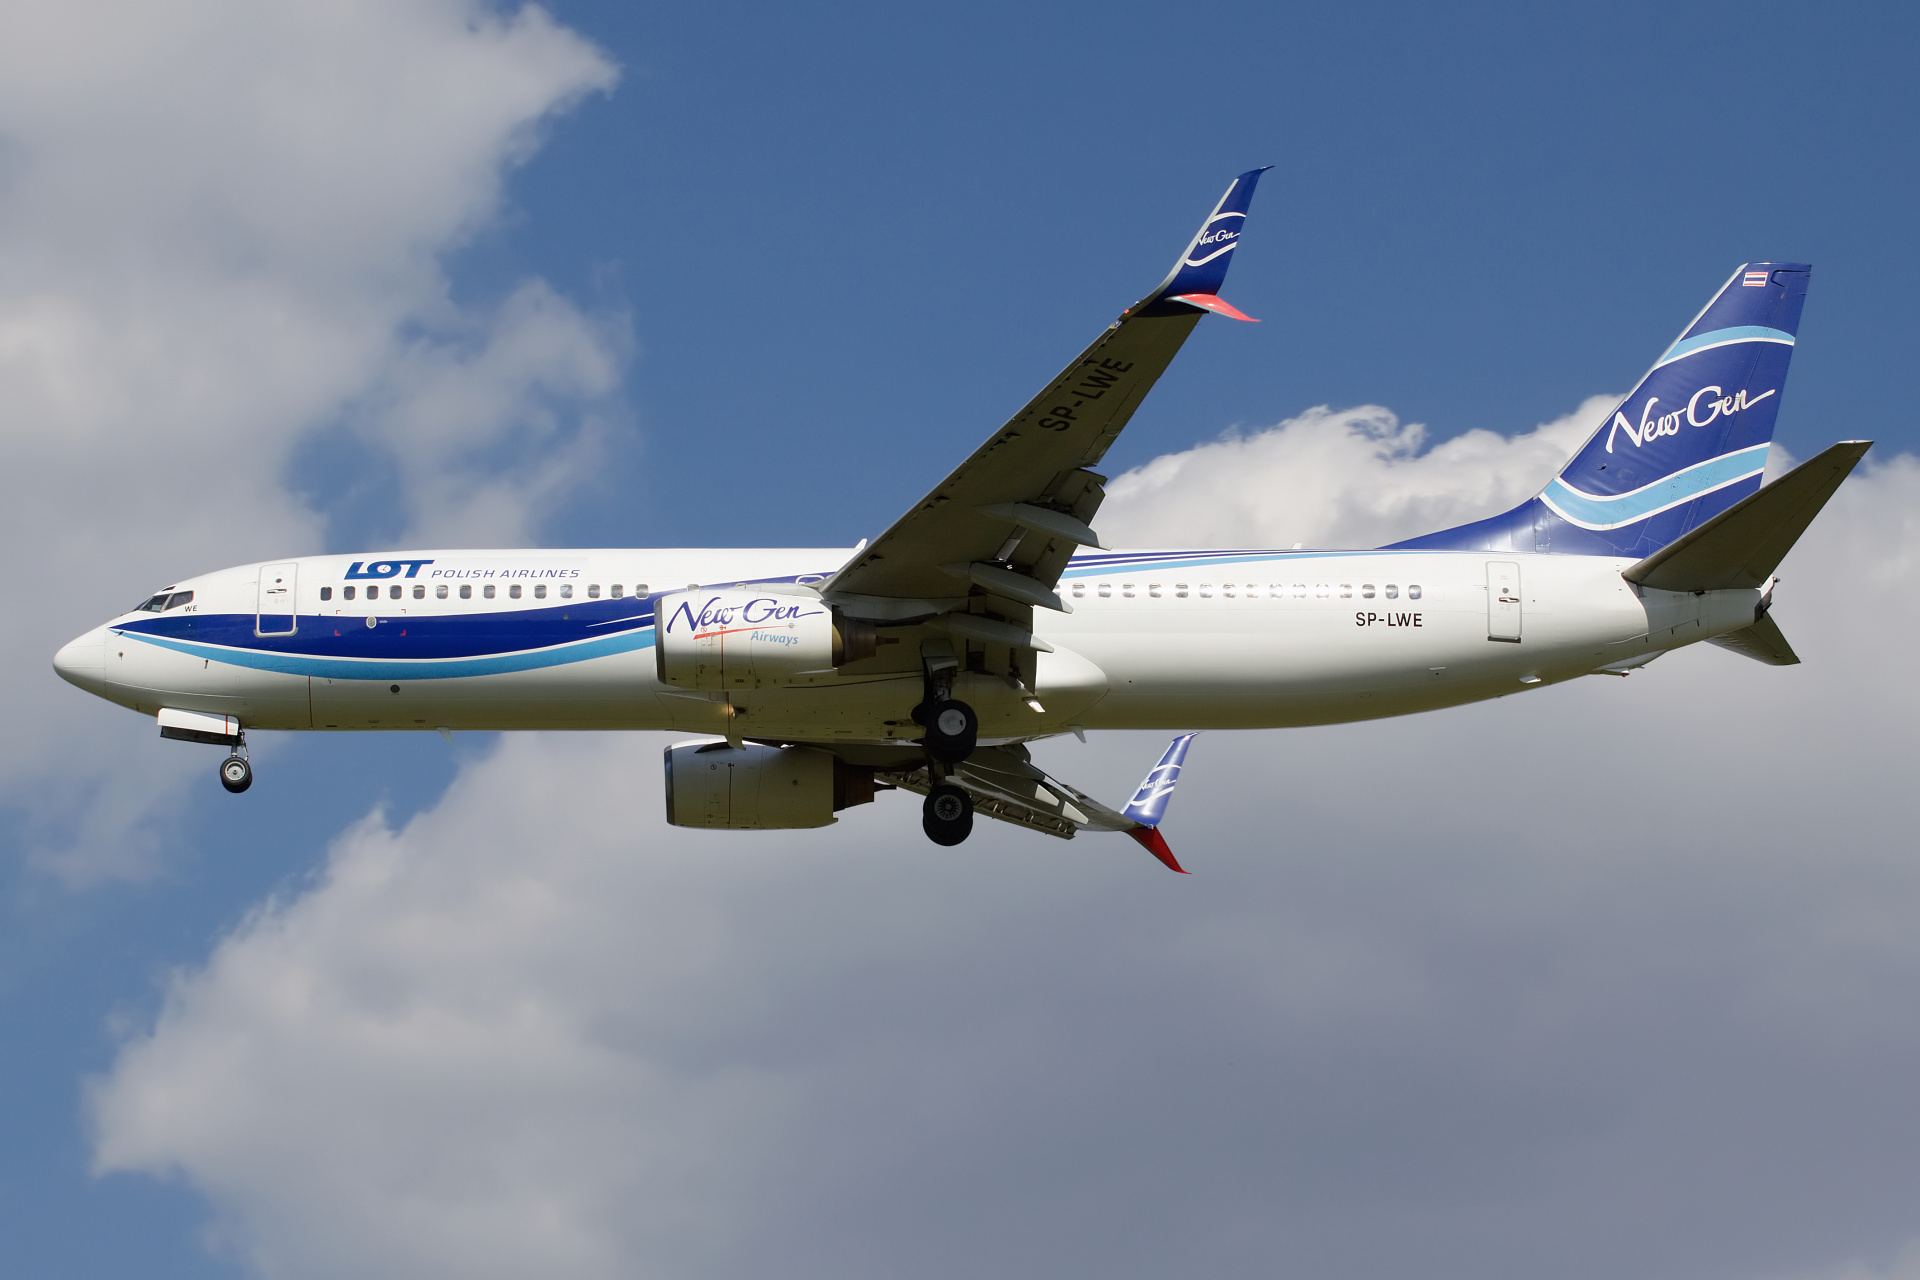 SP-LWE (NewGen Airways) (Aircraft » EPWA Spotting » Boeing 737-800 » LOT Polish Airlines)